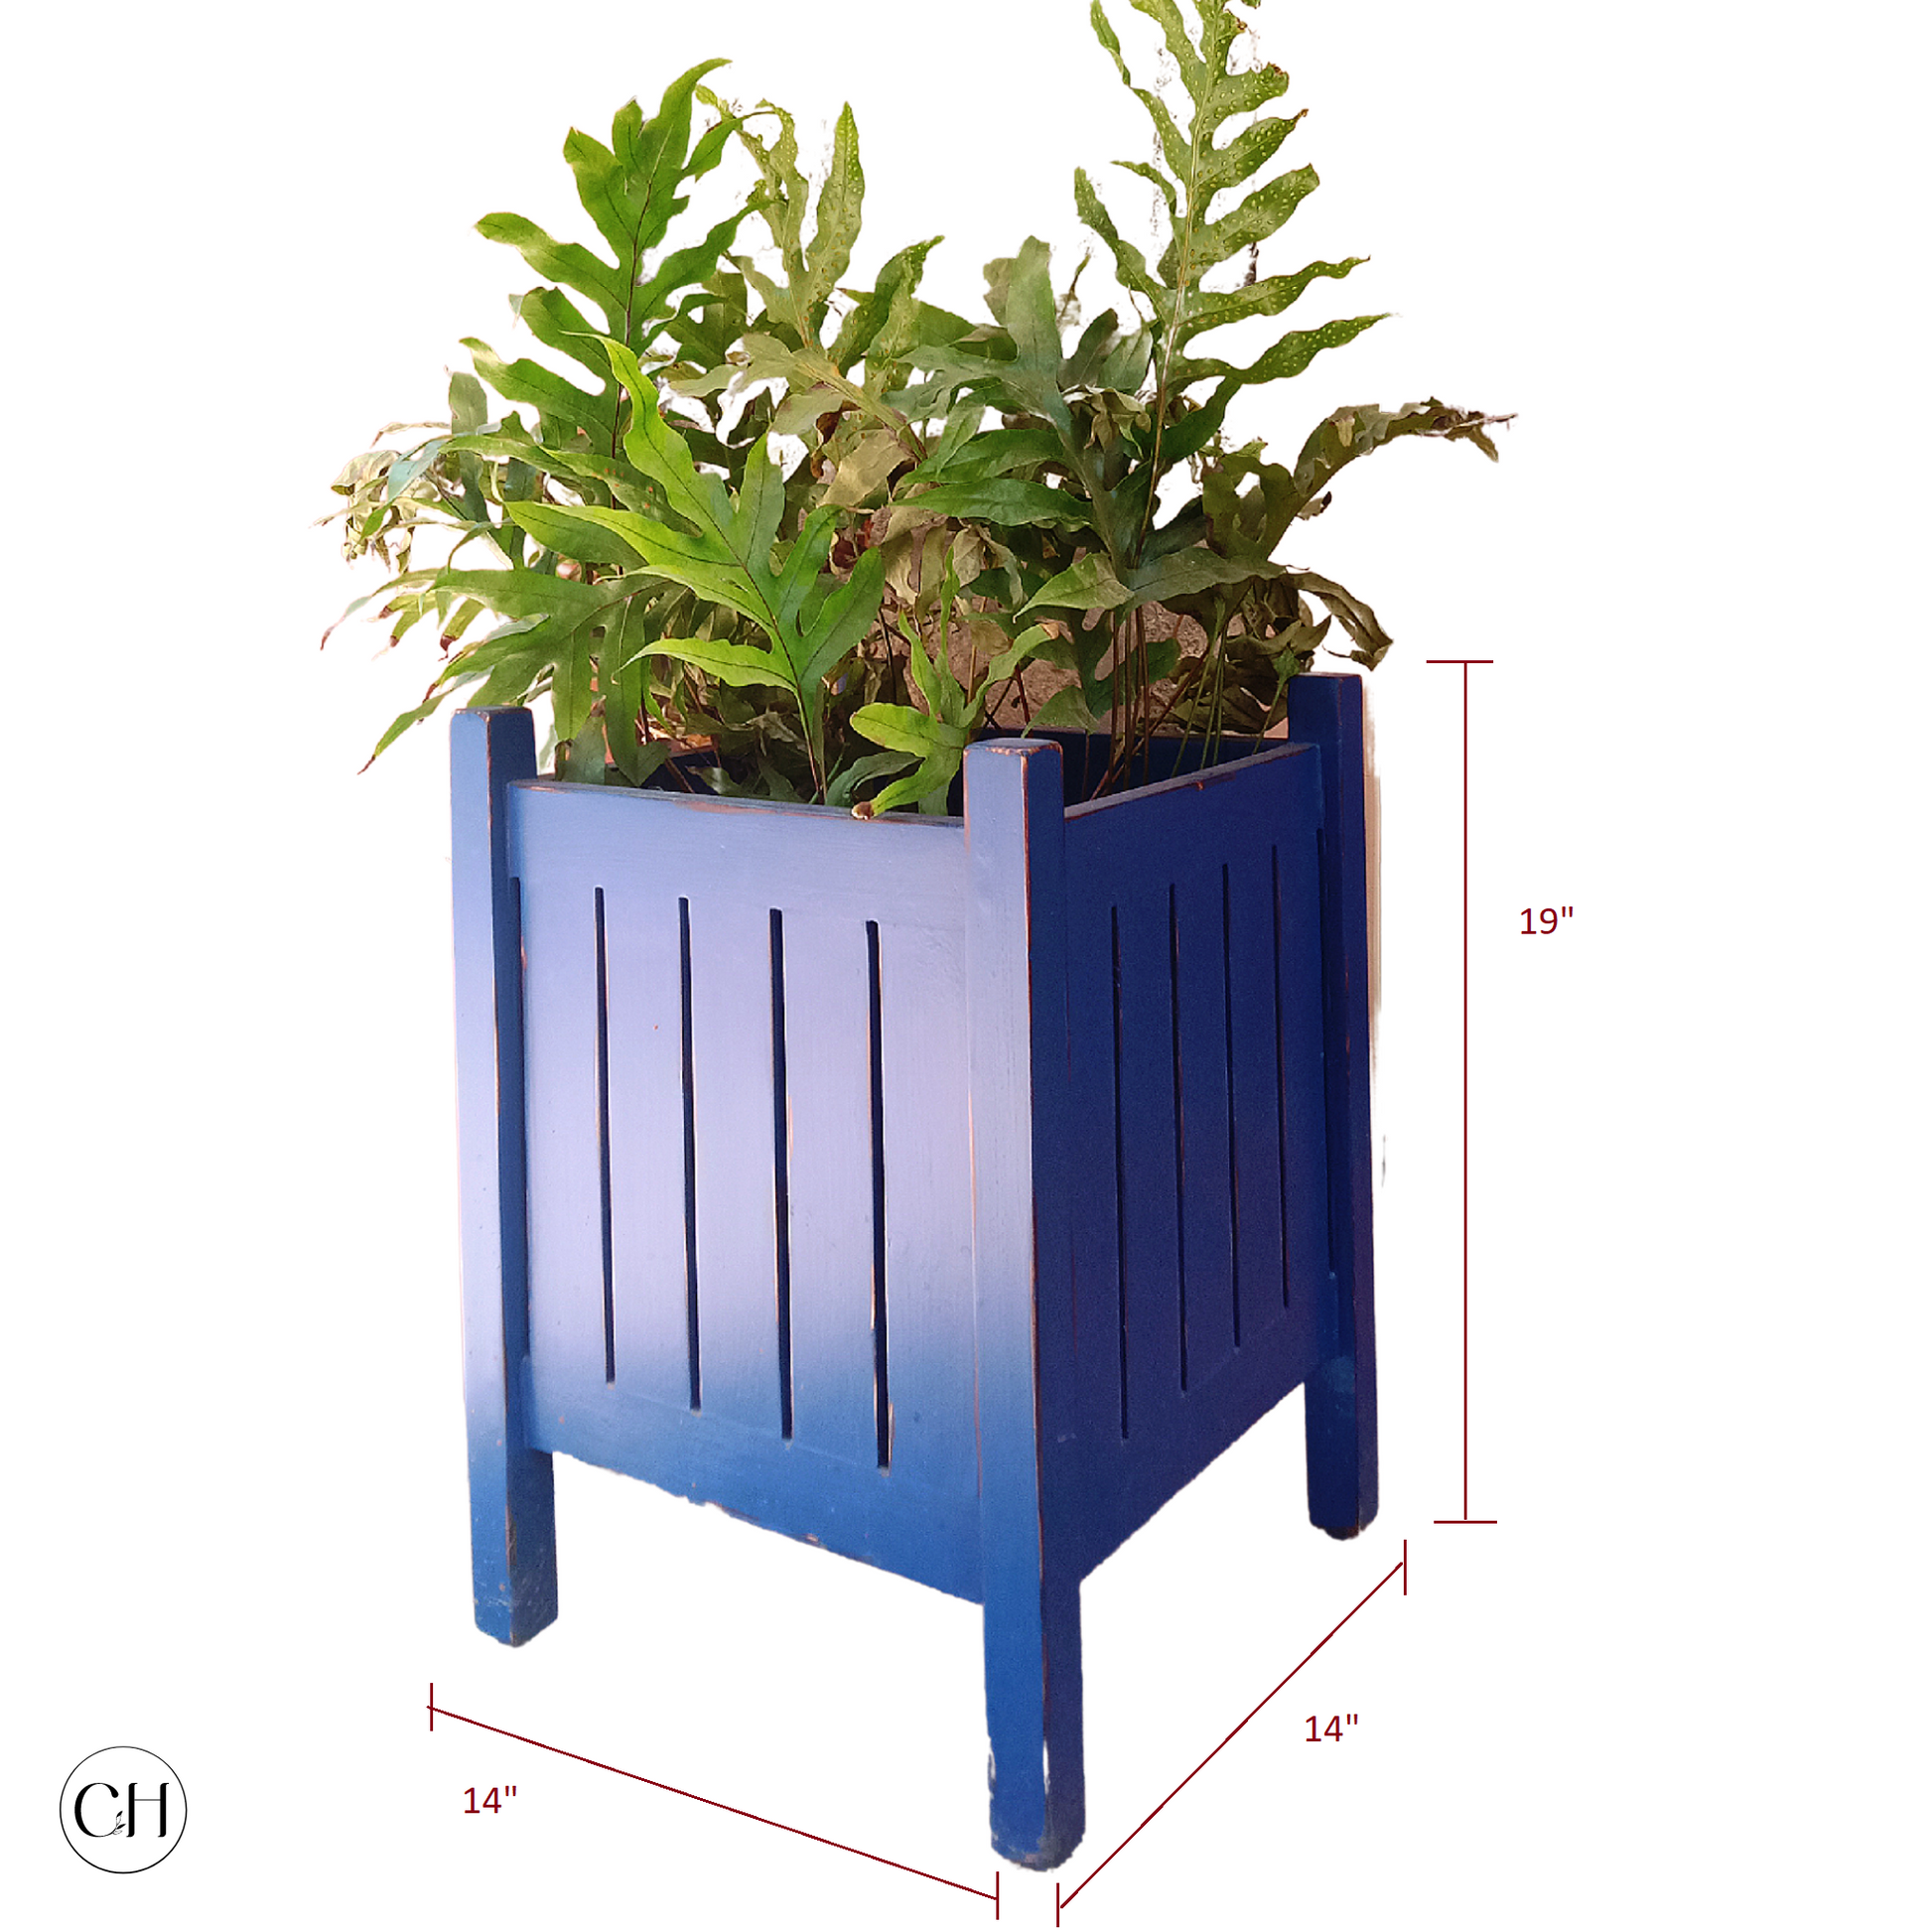 CustHum-Zinnia-rustic wooden planter-distressed blue-dimensions